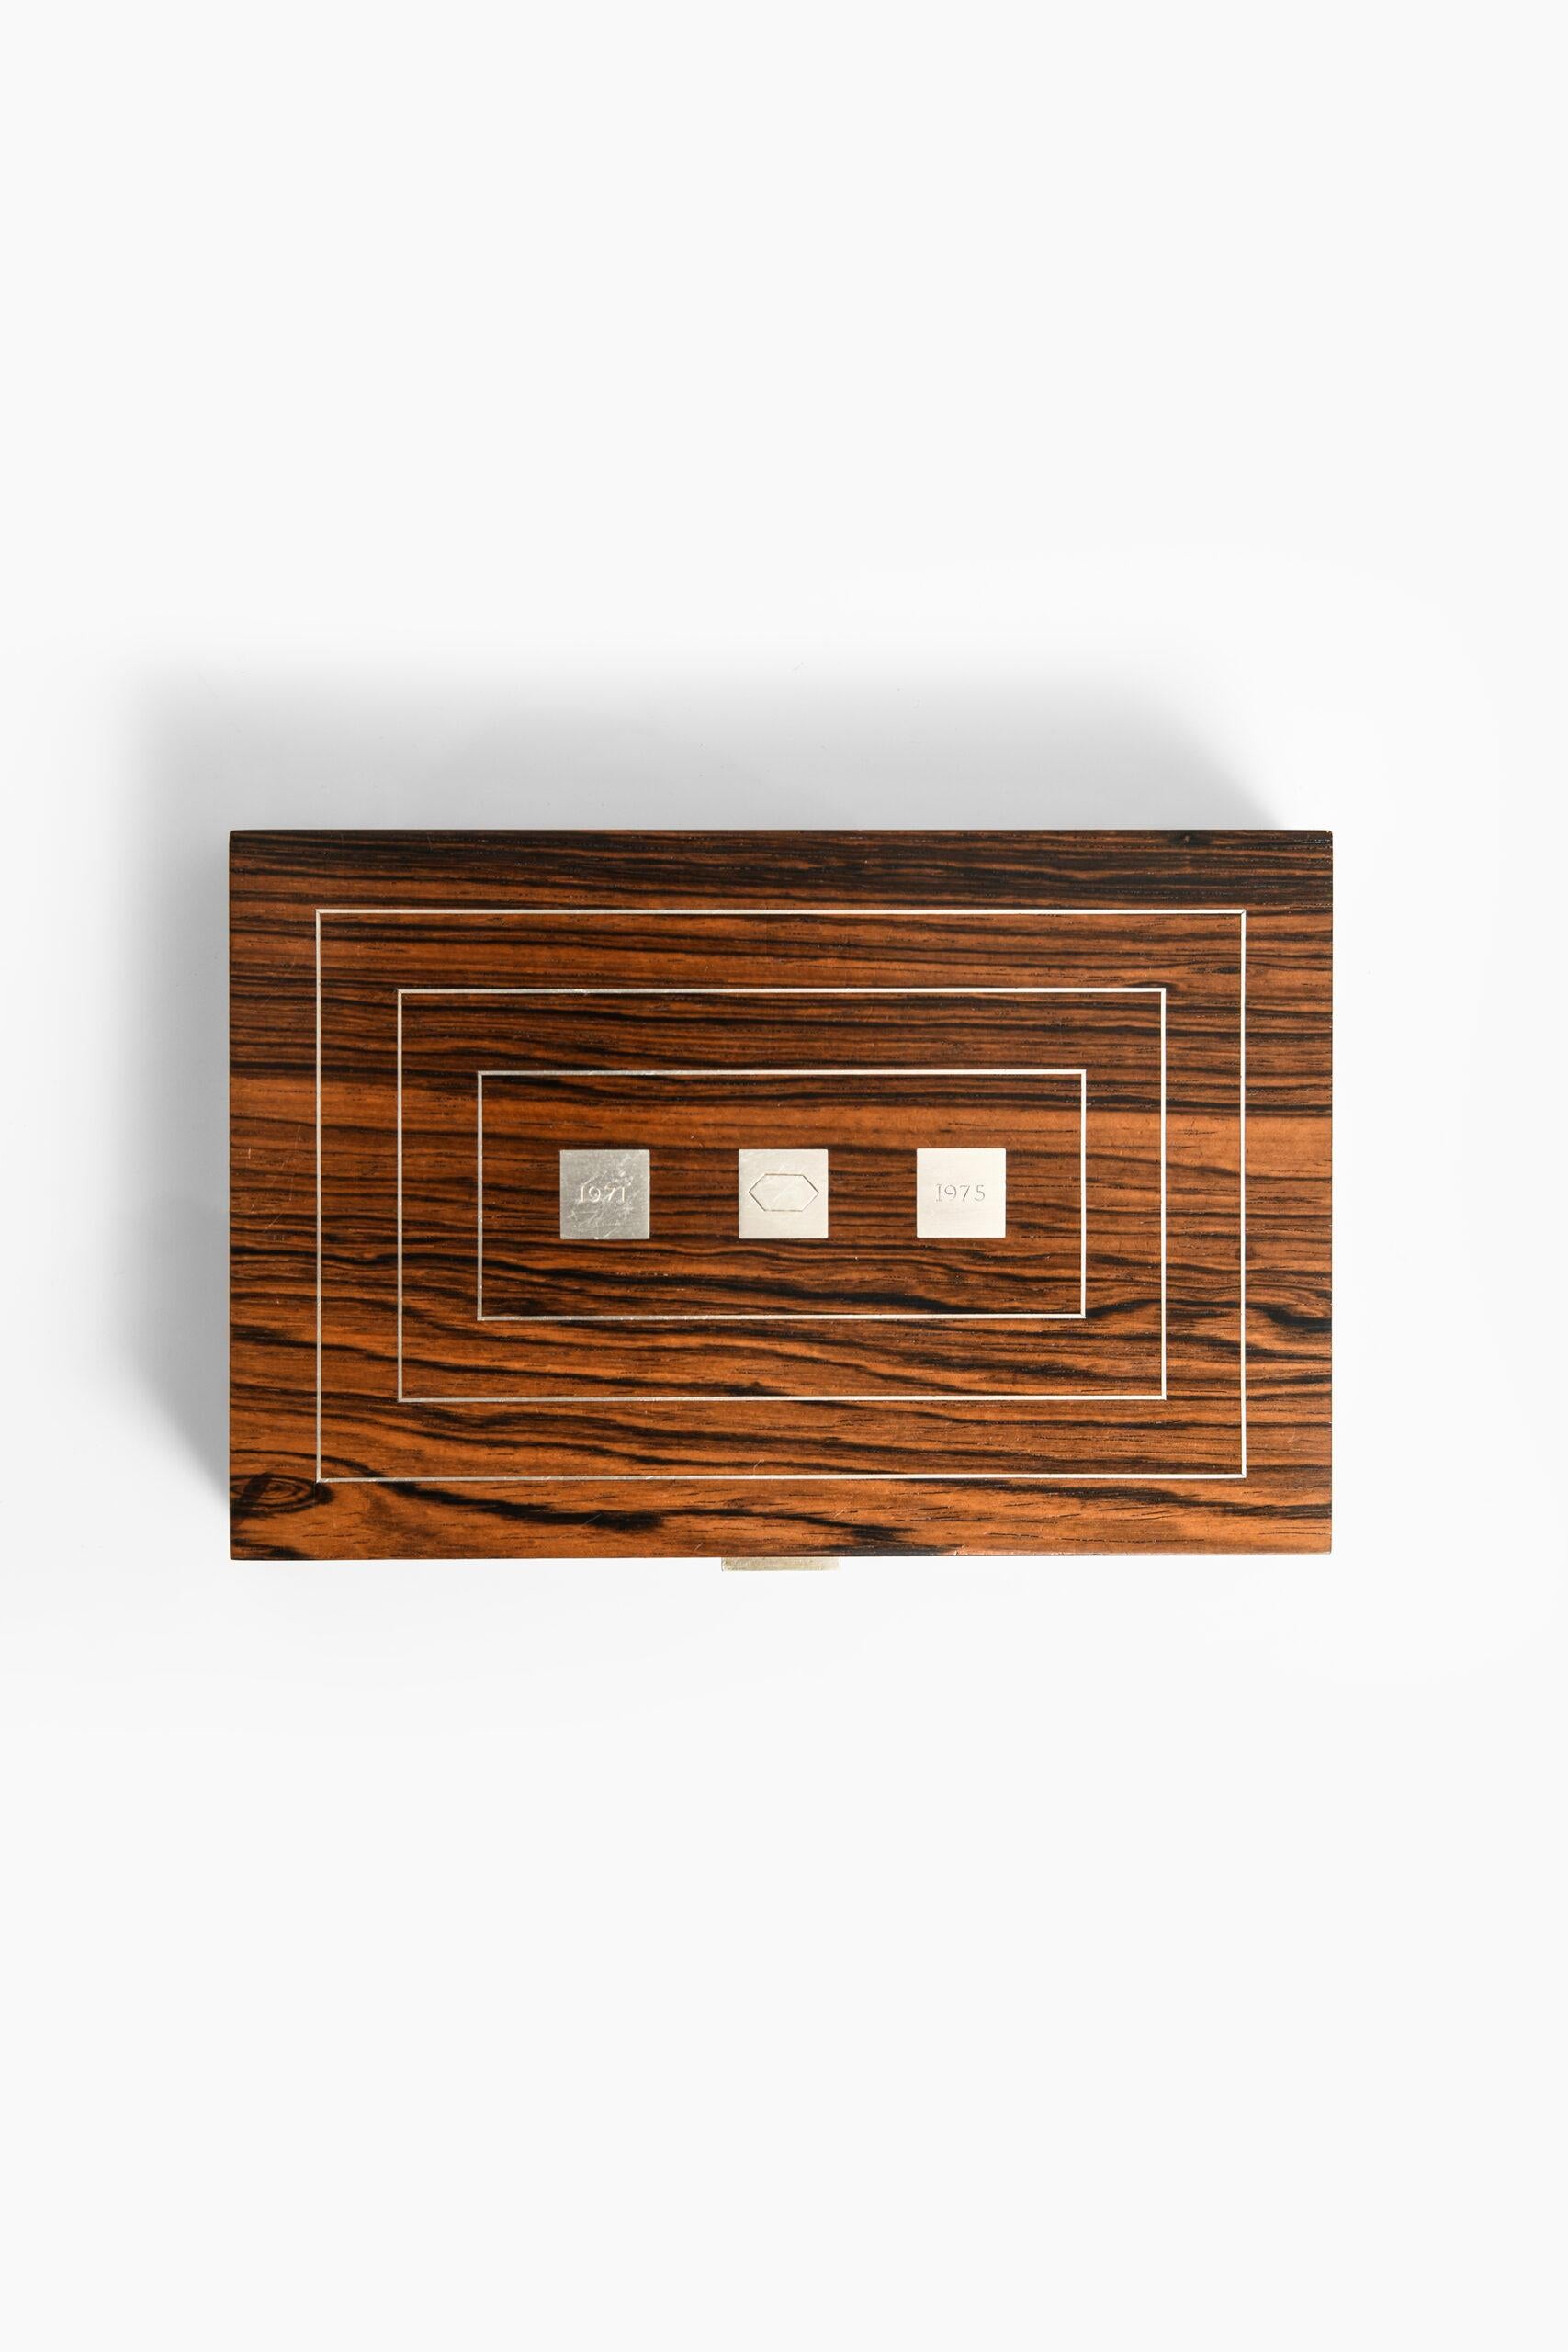 Rare decorative box designed by Hans Hansen. Produced in Denmark.